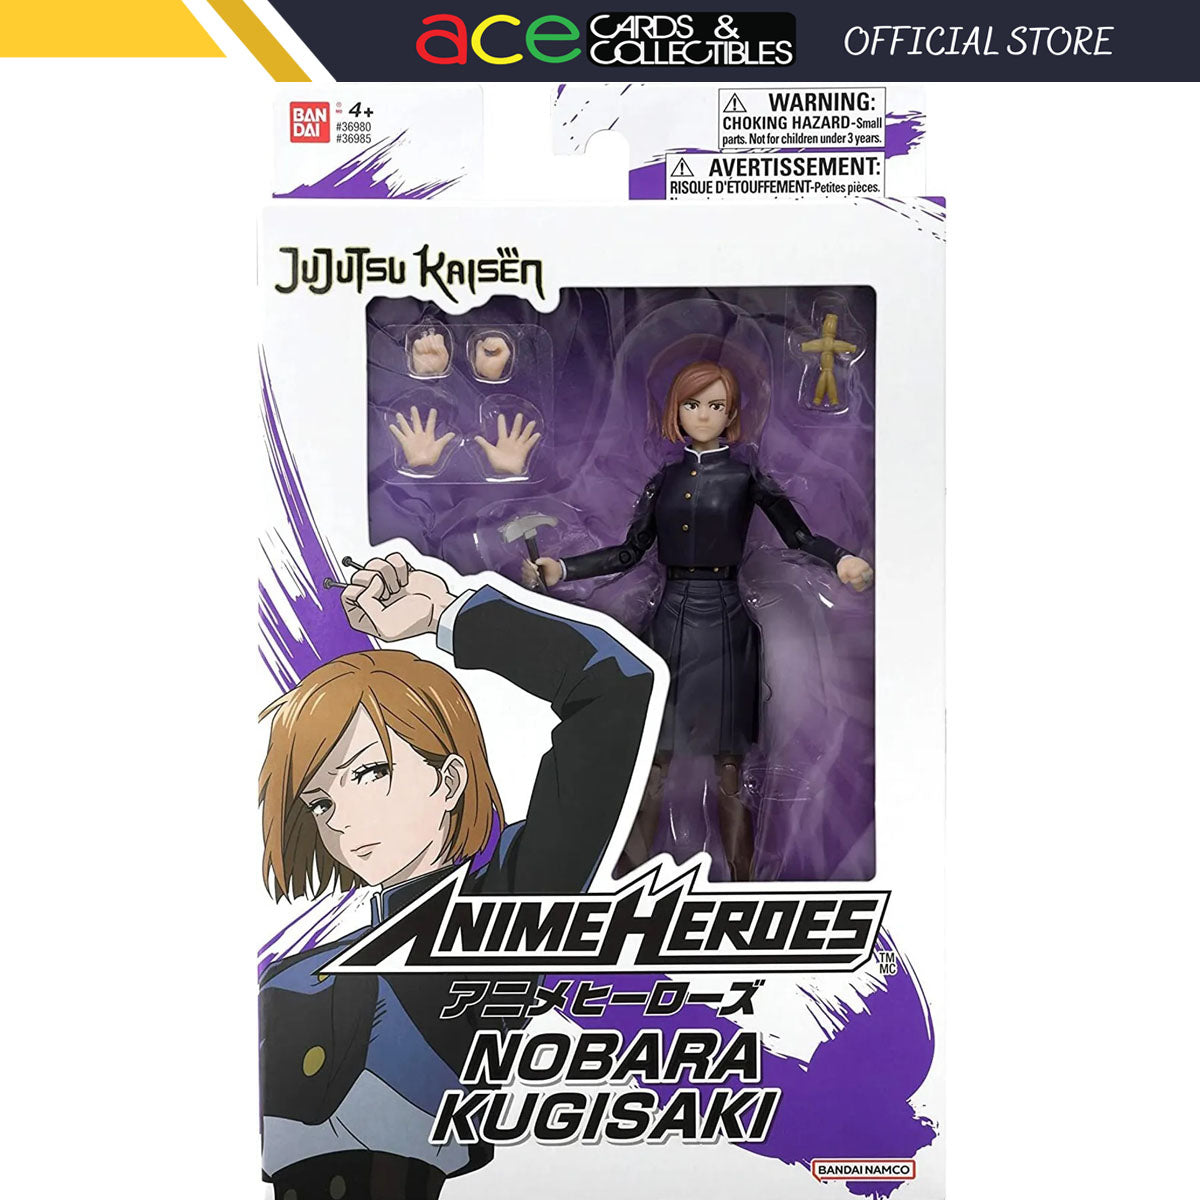 Jujutsu Kaisen Anime Heroes "Nobara Kugisaki" Action Figure-Bandai-Ace Cards & Collectibles